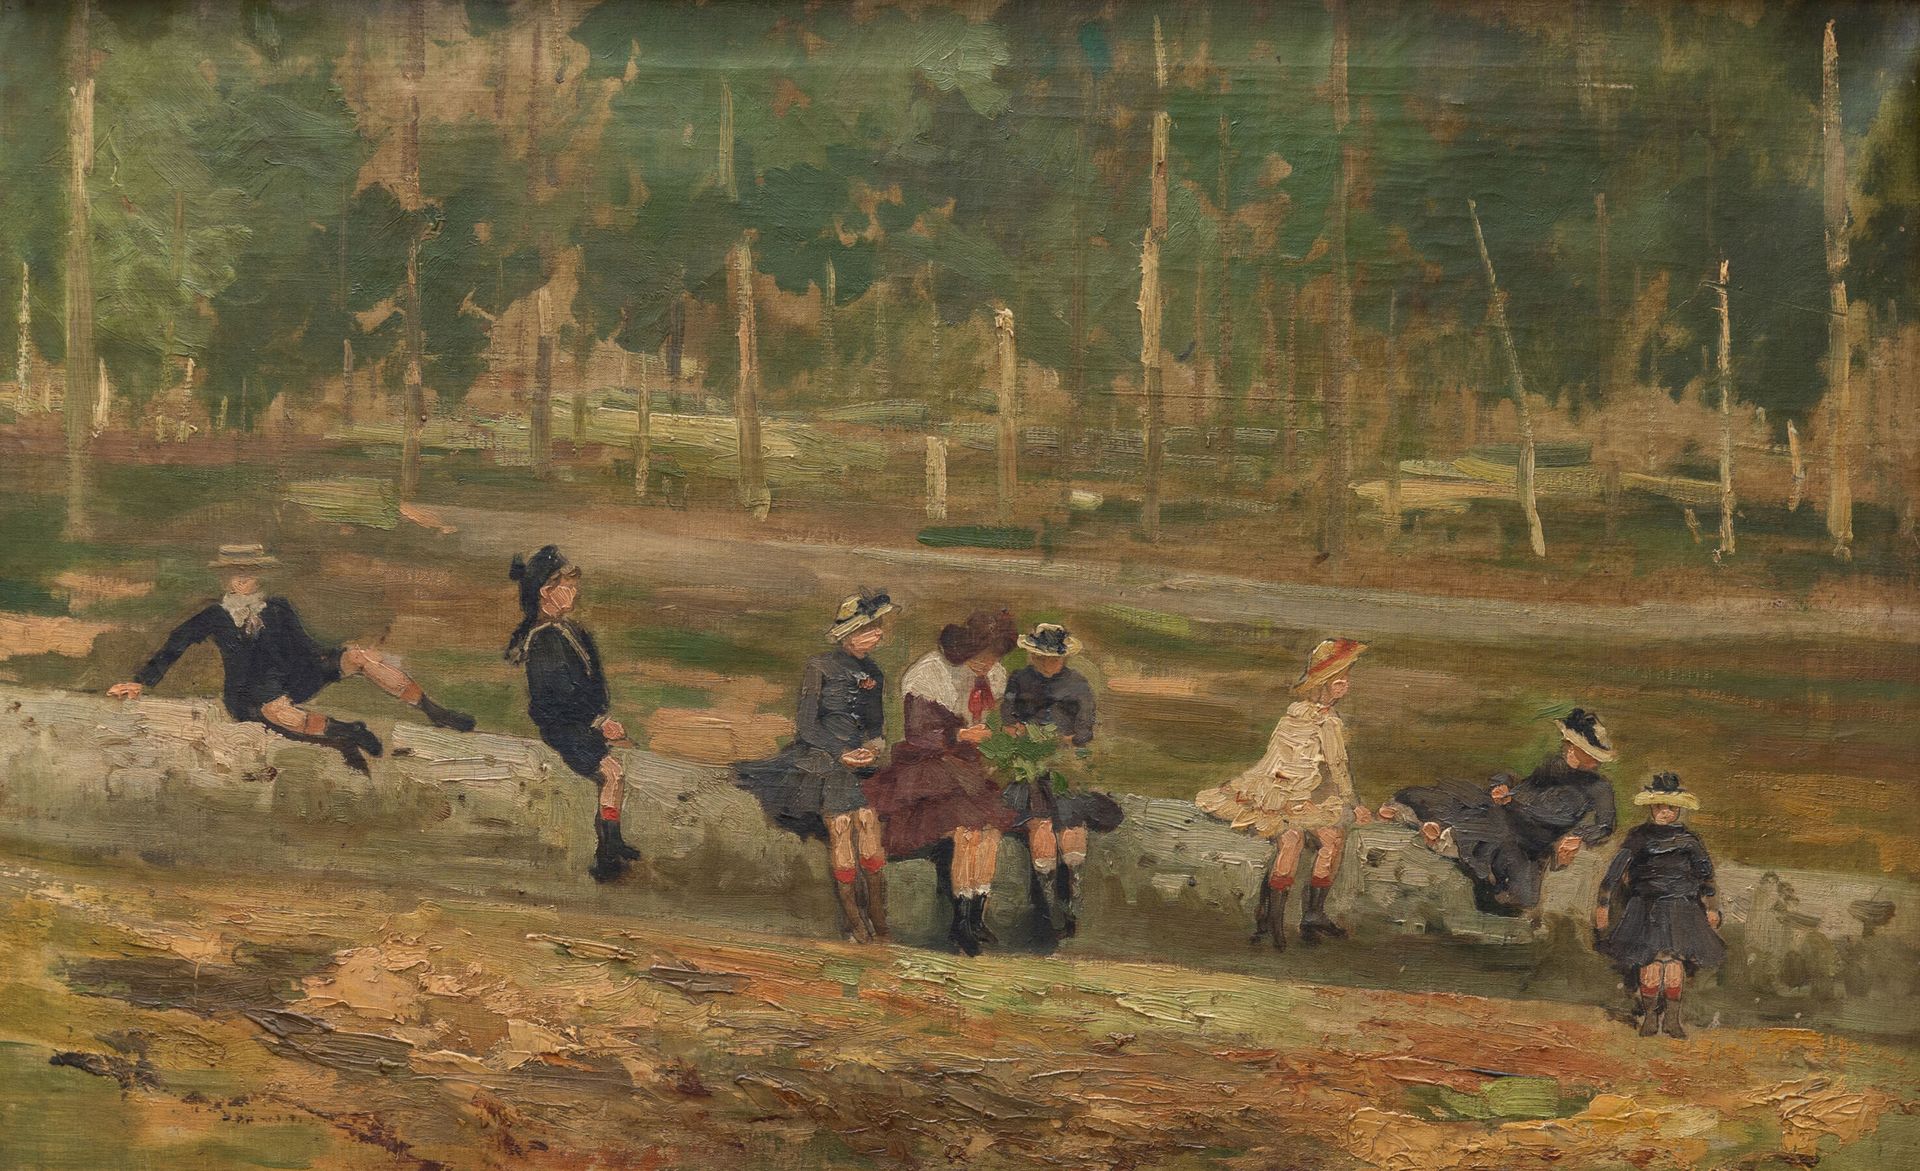 Null 法国或比利时的学校，约1920年。
孩子们坐在森林附近的树干上。
布面油画，无签名。
高_45厘米，宽_73厘米
装在一个现代的部分绿漆的框架里。